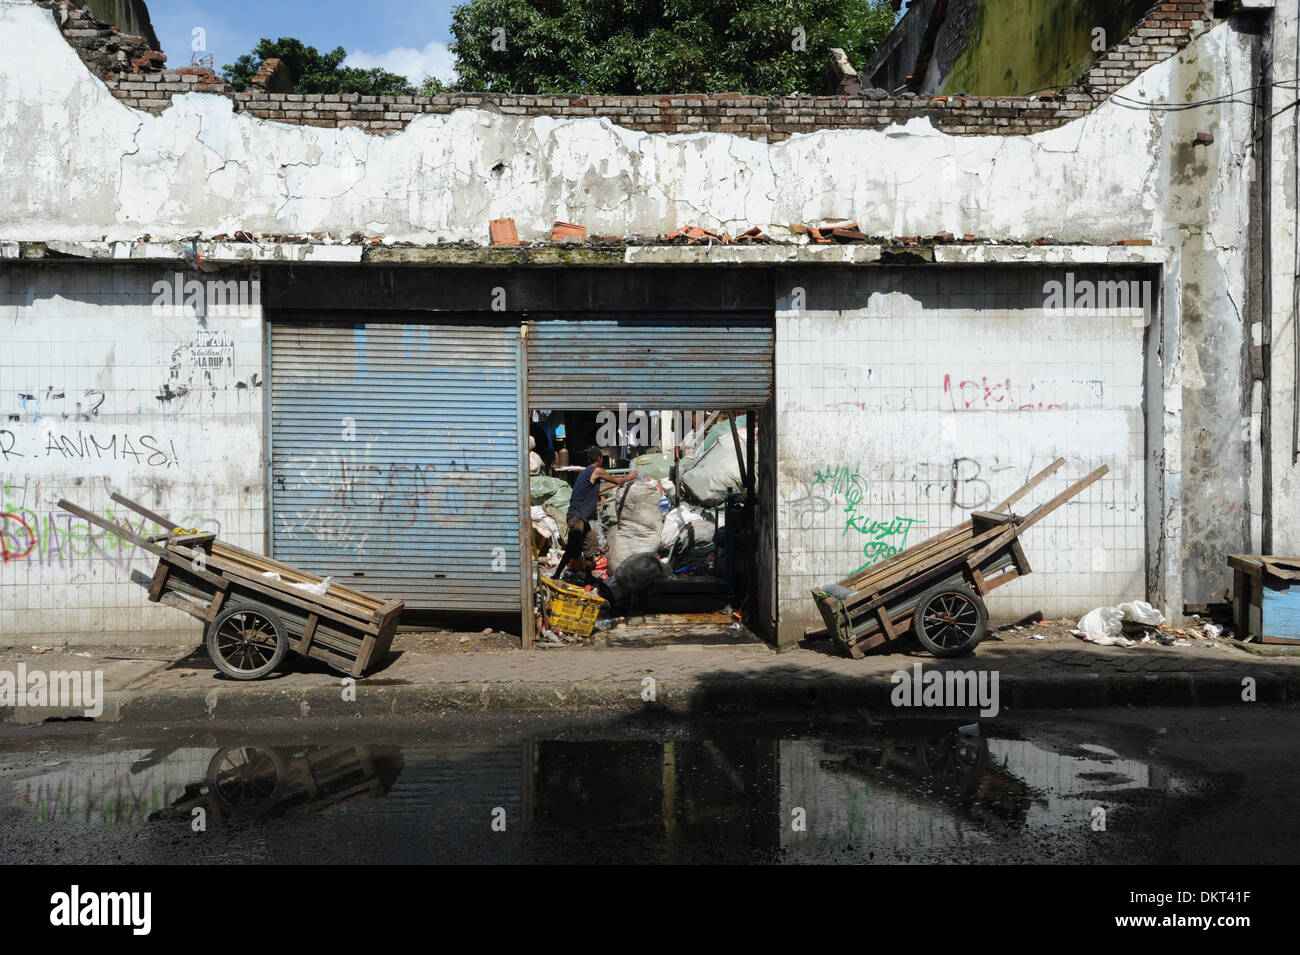 Asia, Indonesia, Java, Djakarta, Kota, scales, sheds, carts, mouldered, ruin, Stock Photo